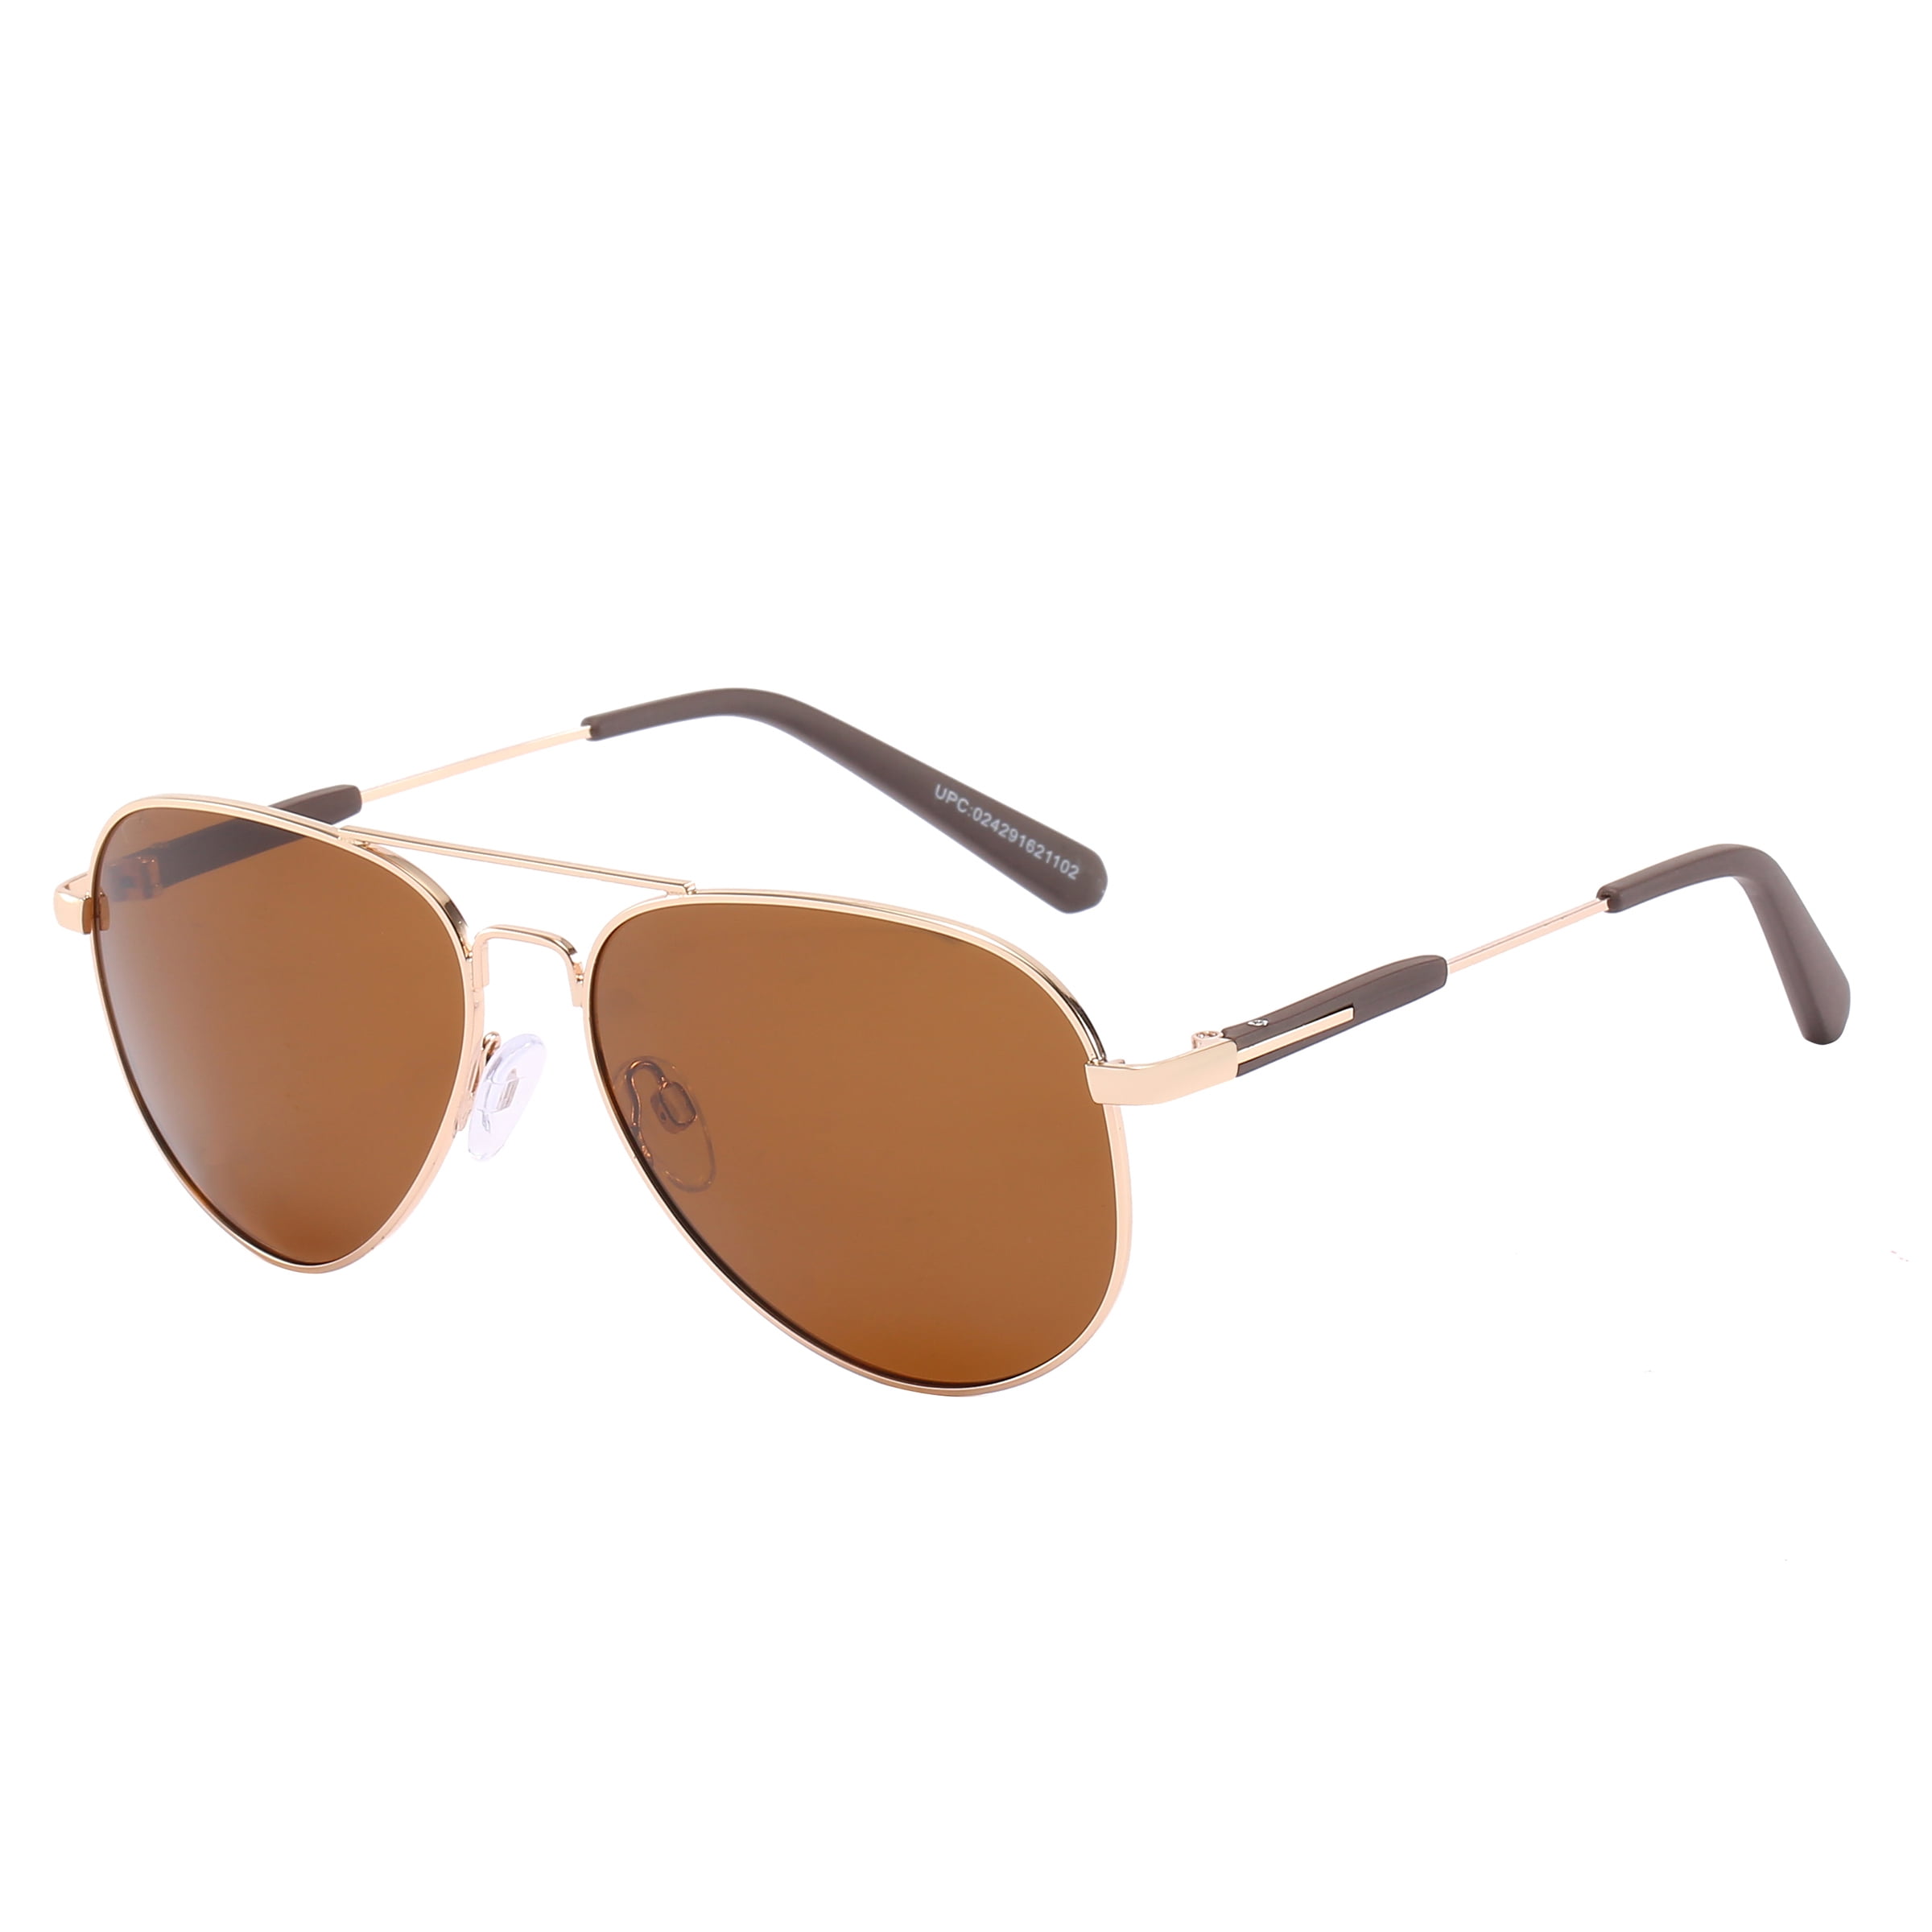 Piranha Eyewear Eclipse Gold Polarized Aviator Sunglasses with